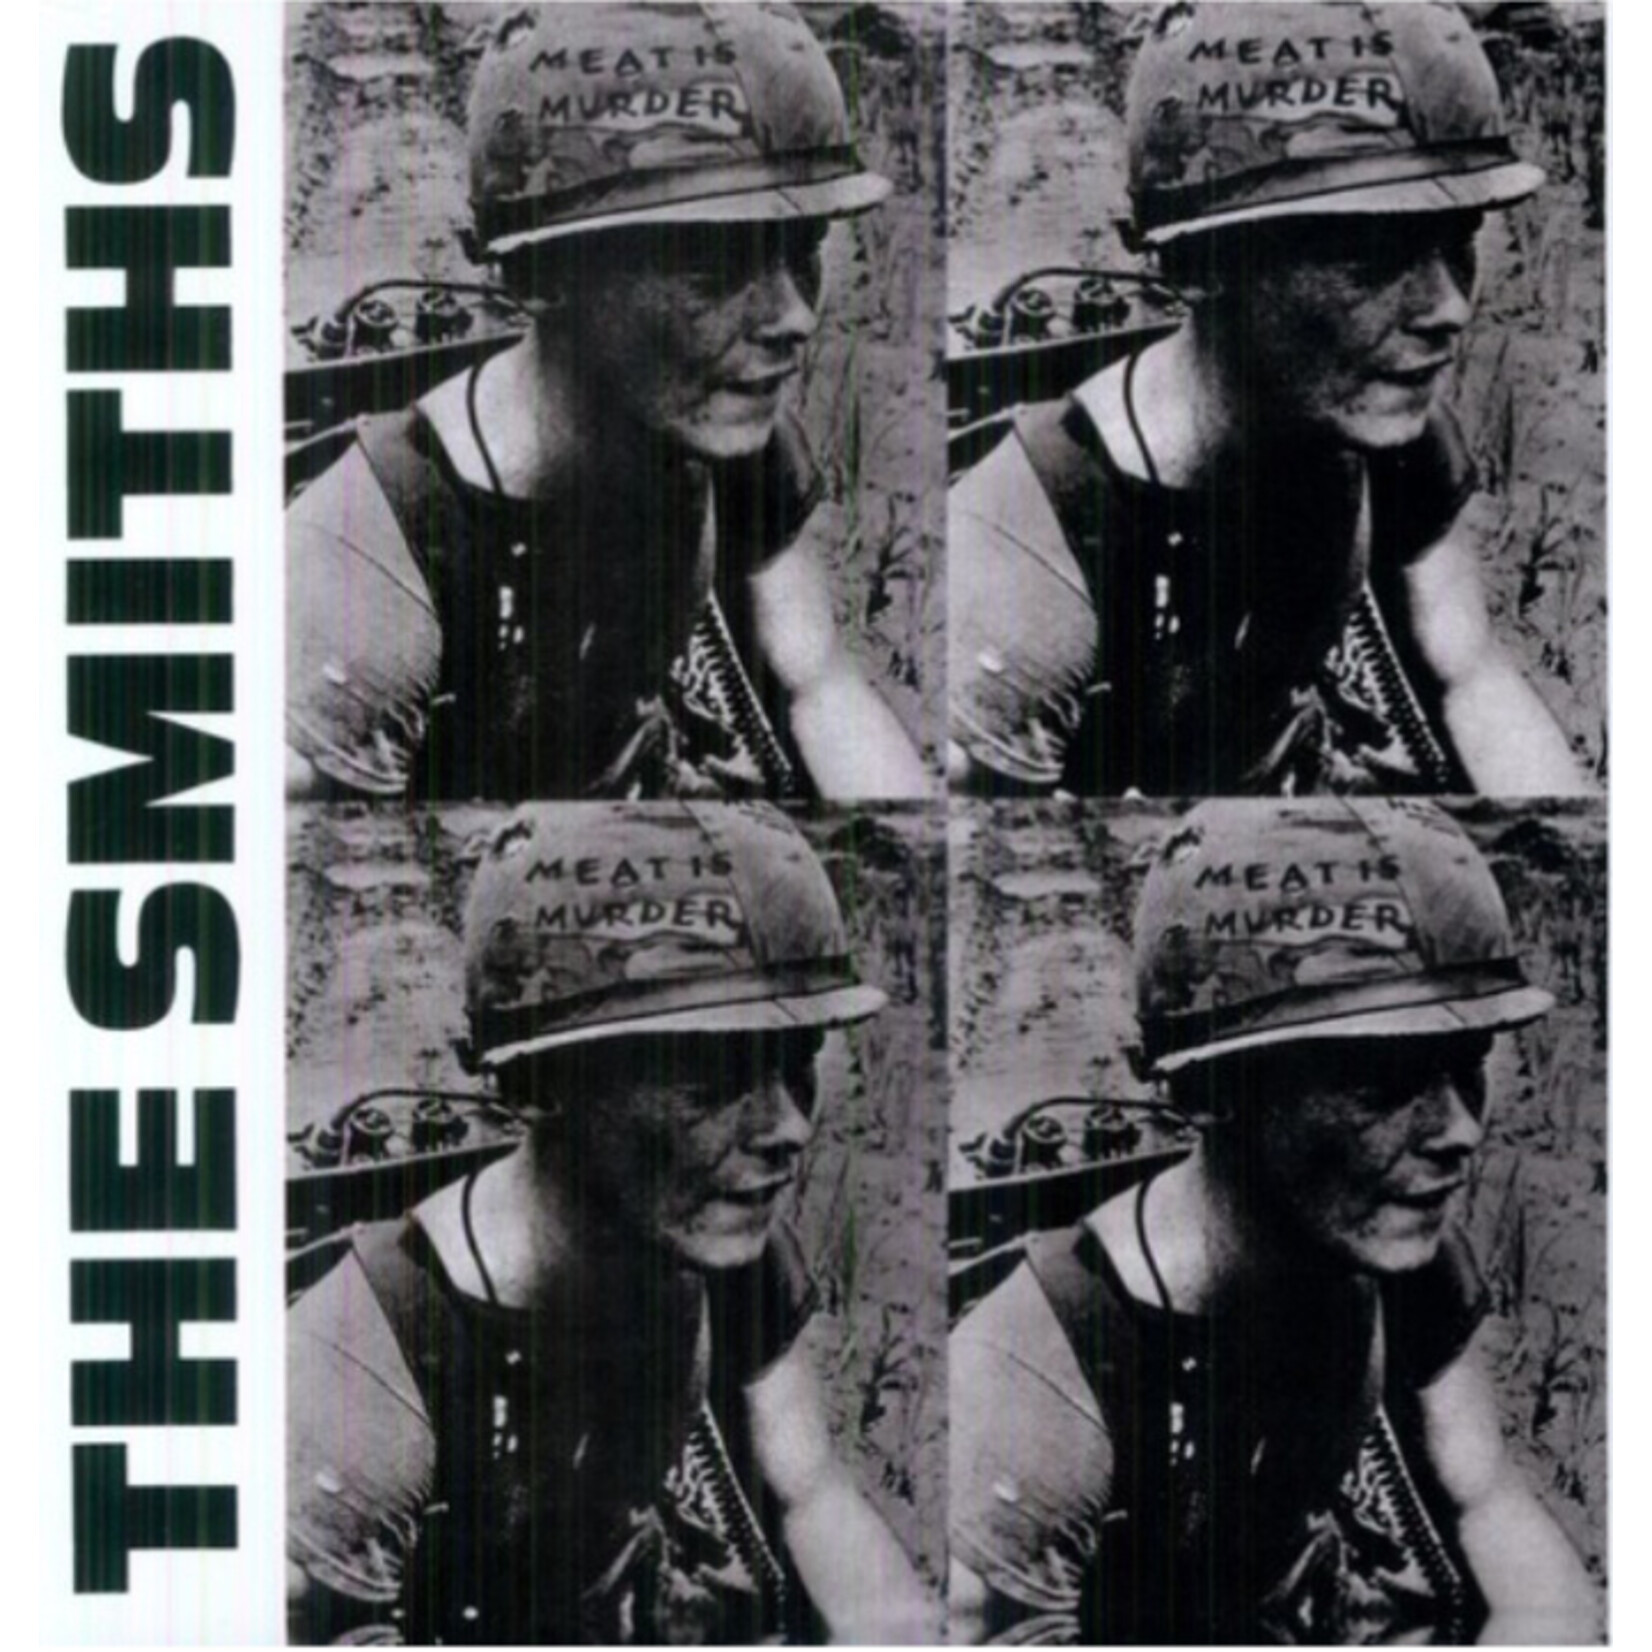 Smiths - Meat Is Murder - RHI658787 - Vinyl LP (NEW)